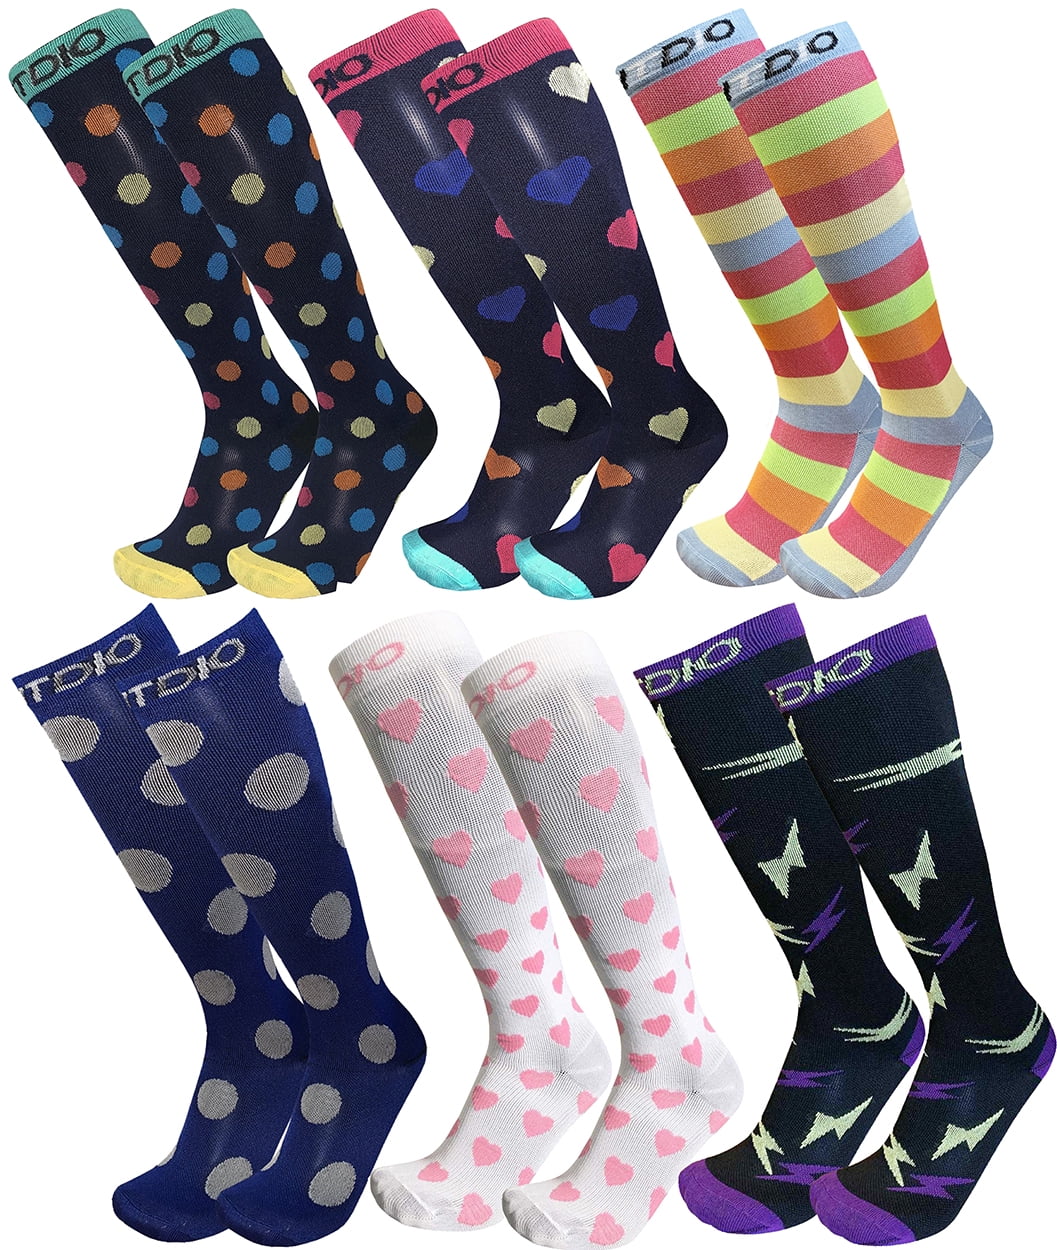 FITDIO Knee High 20-30mmHG Feminine Print 6-Pack Graduated Compression Socks For Women 